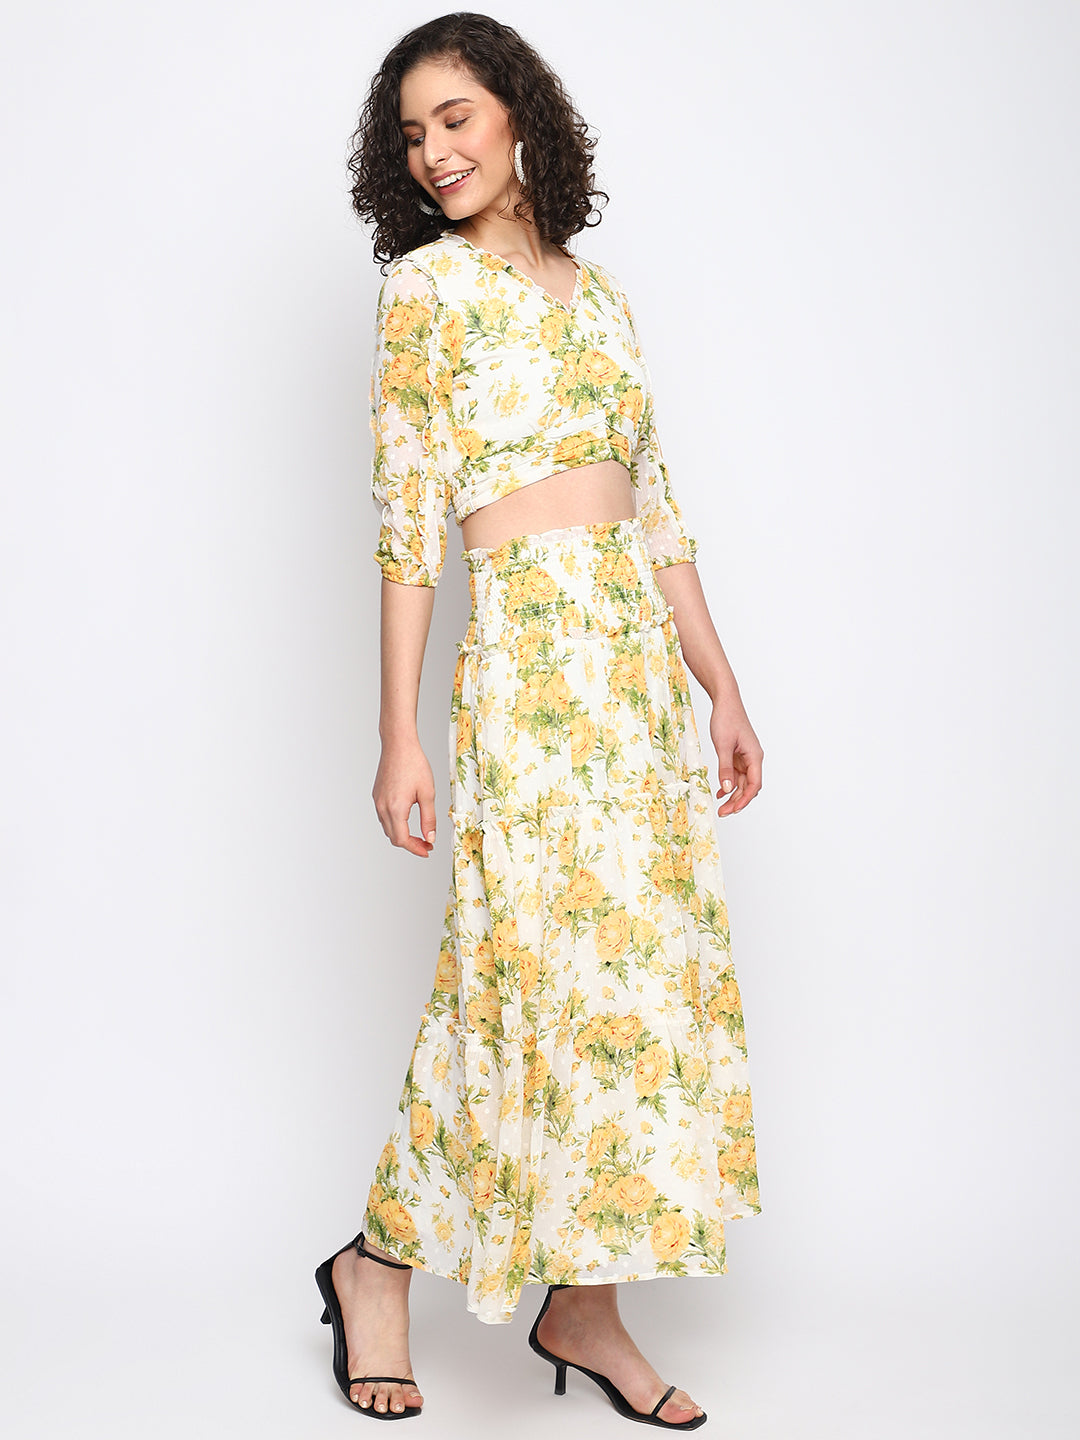 Yellow 3/4 Sleeve Printed Cordset Dress